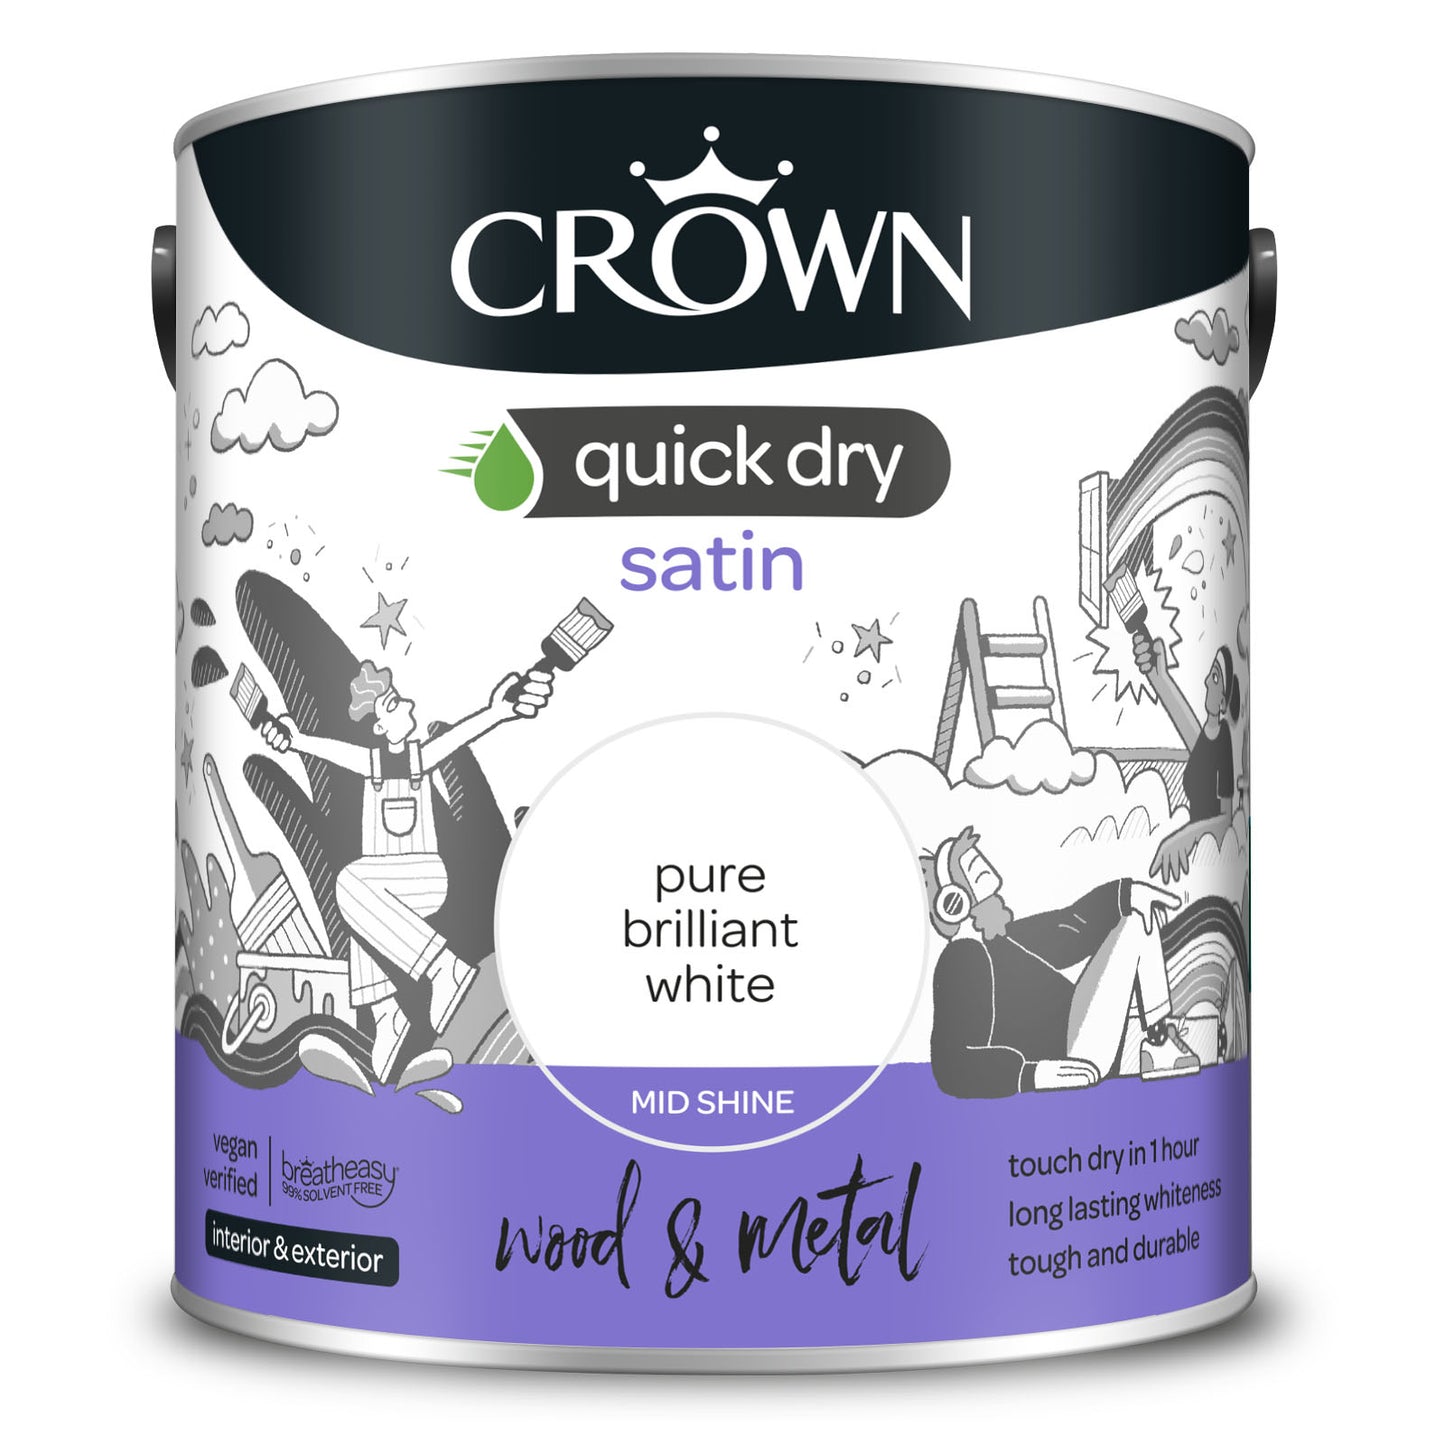 Crown Quick Dry Satin Brilliant White